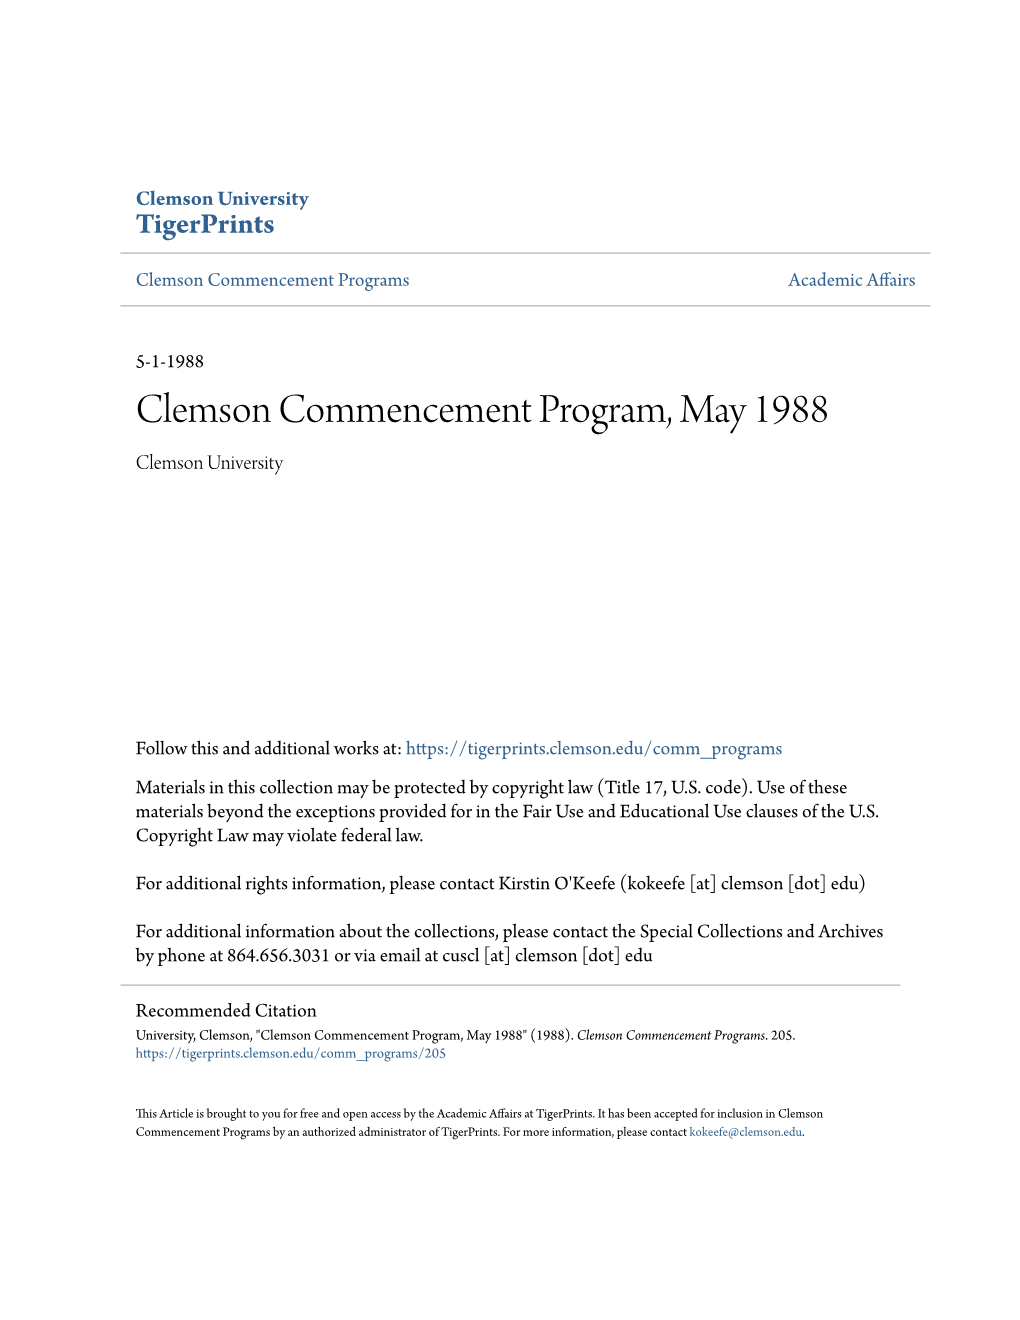 Clemson Commencement Program, May 1988 Clemson University